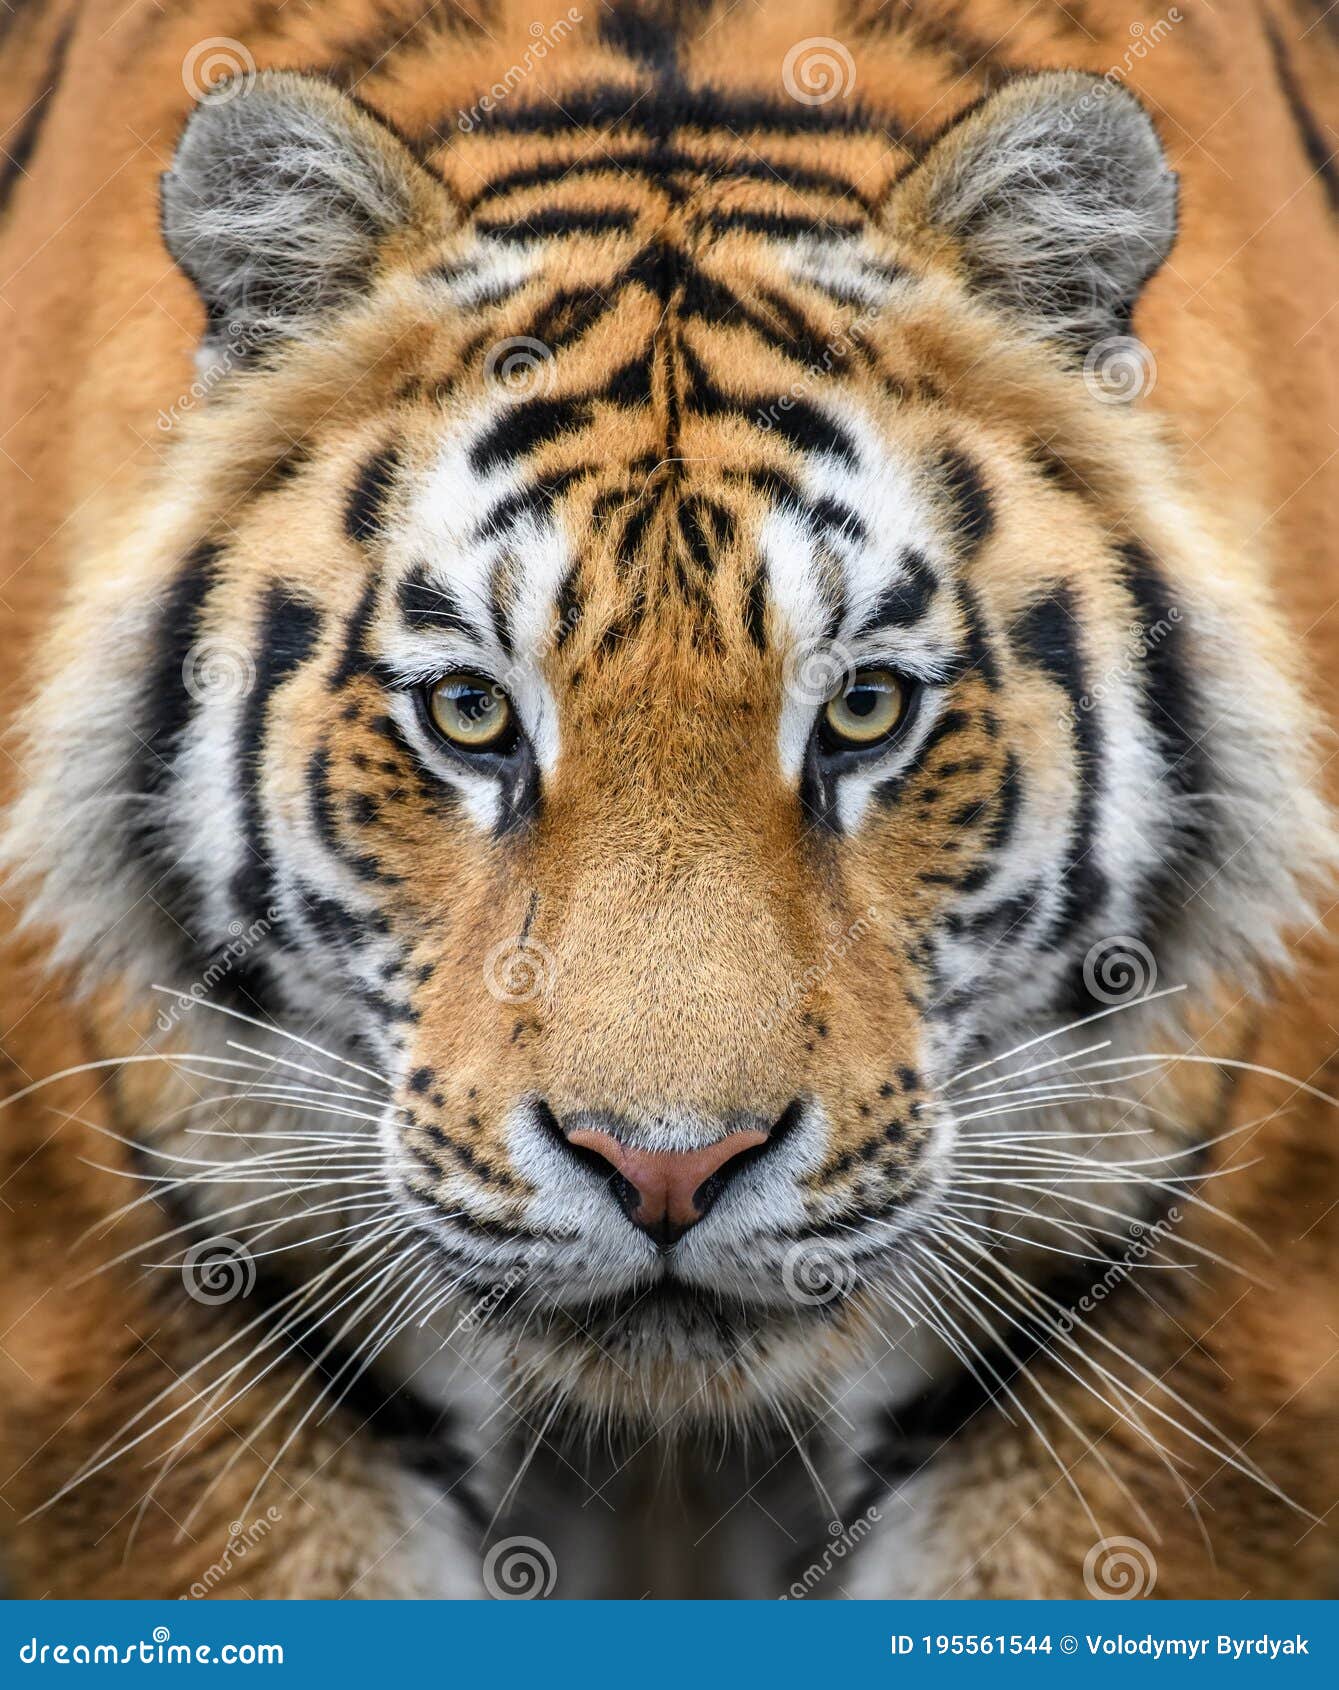 close-up detail portrait of big siberian or amur tiger